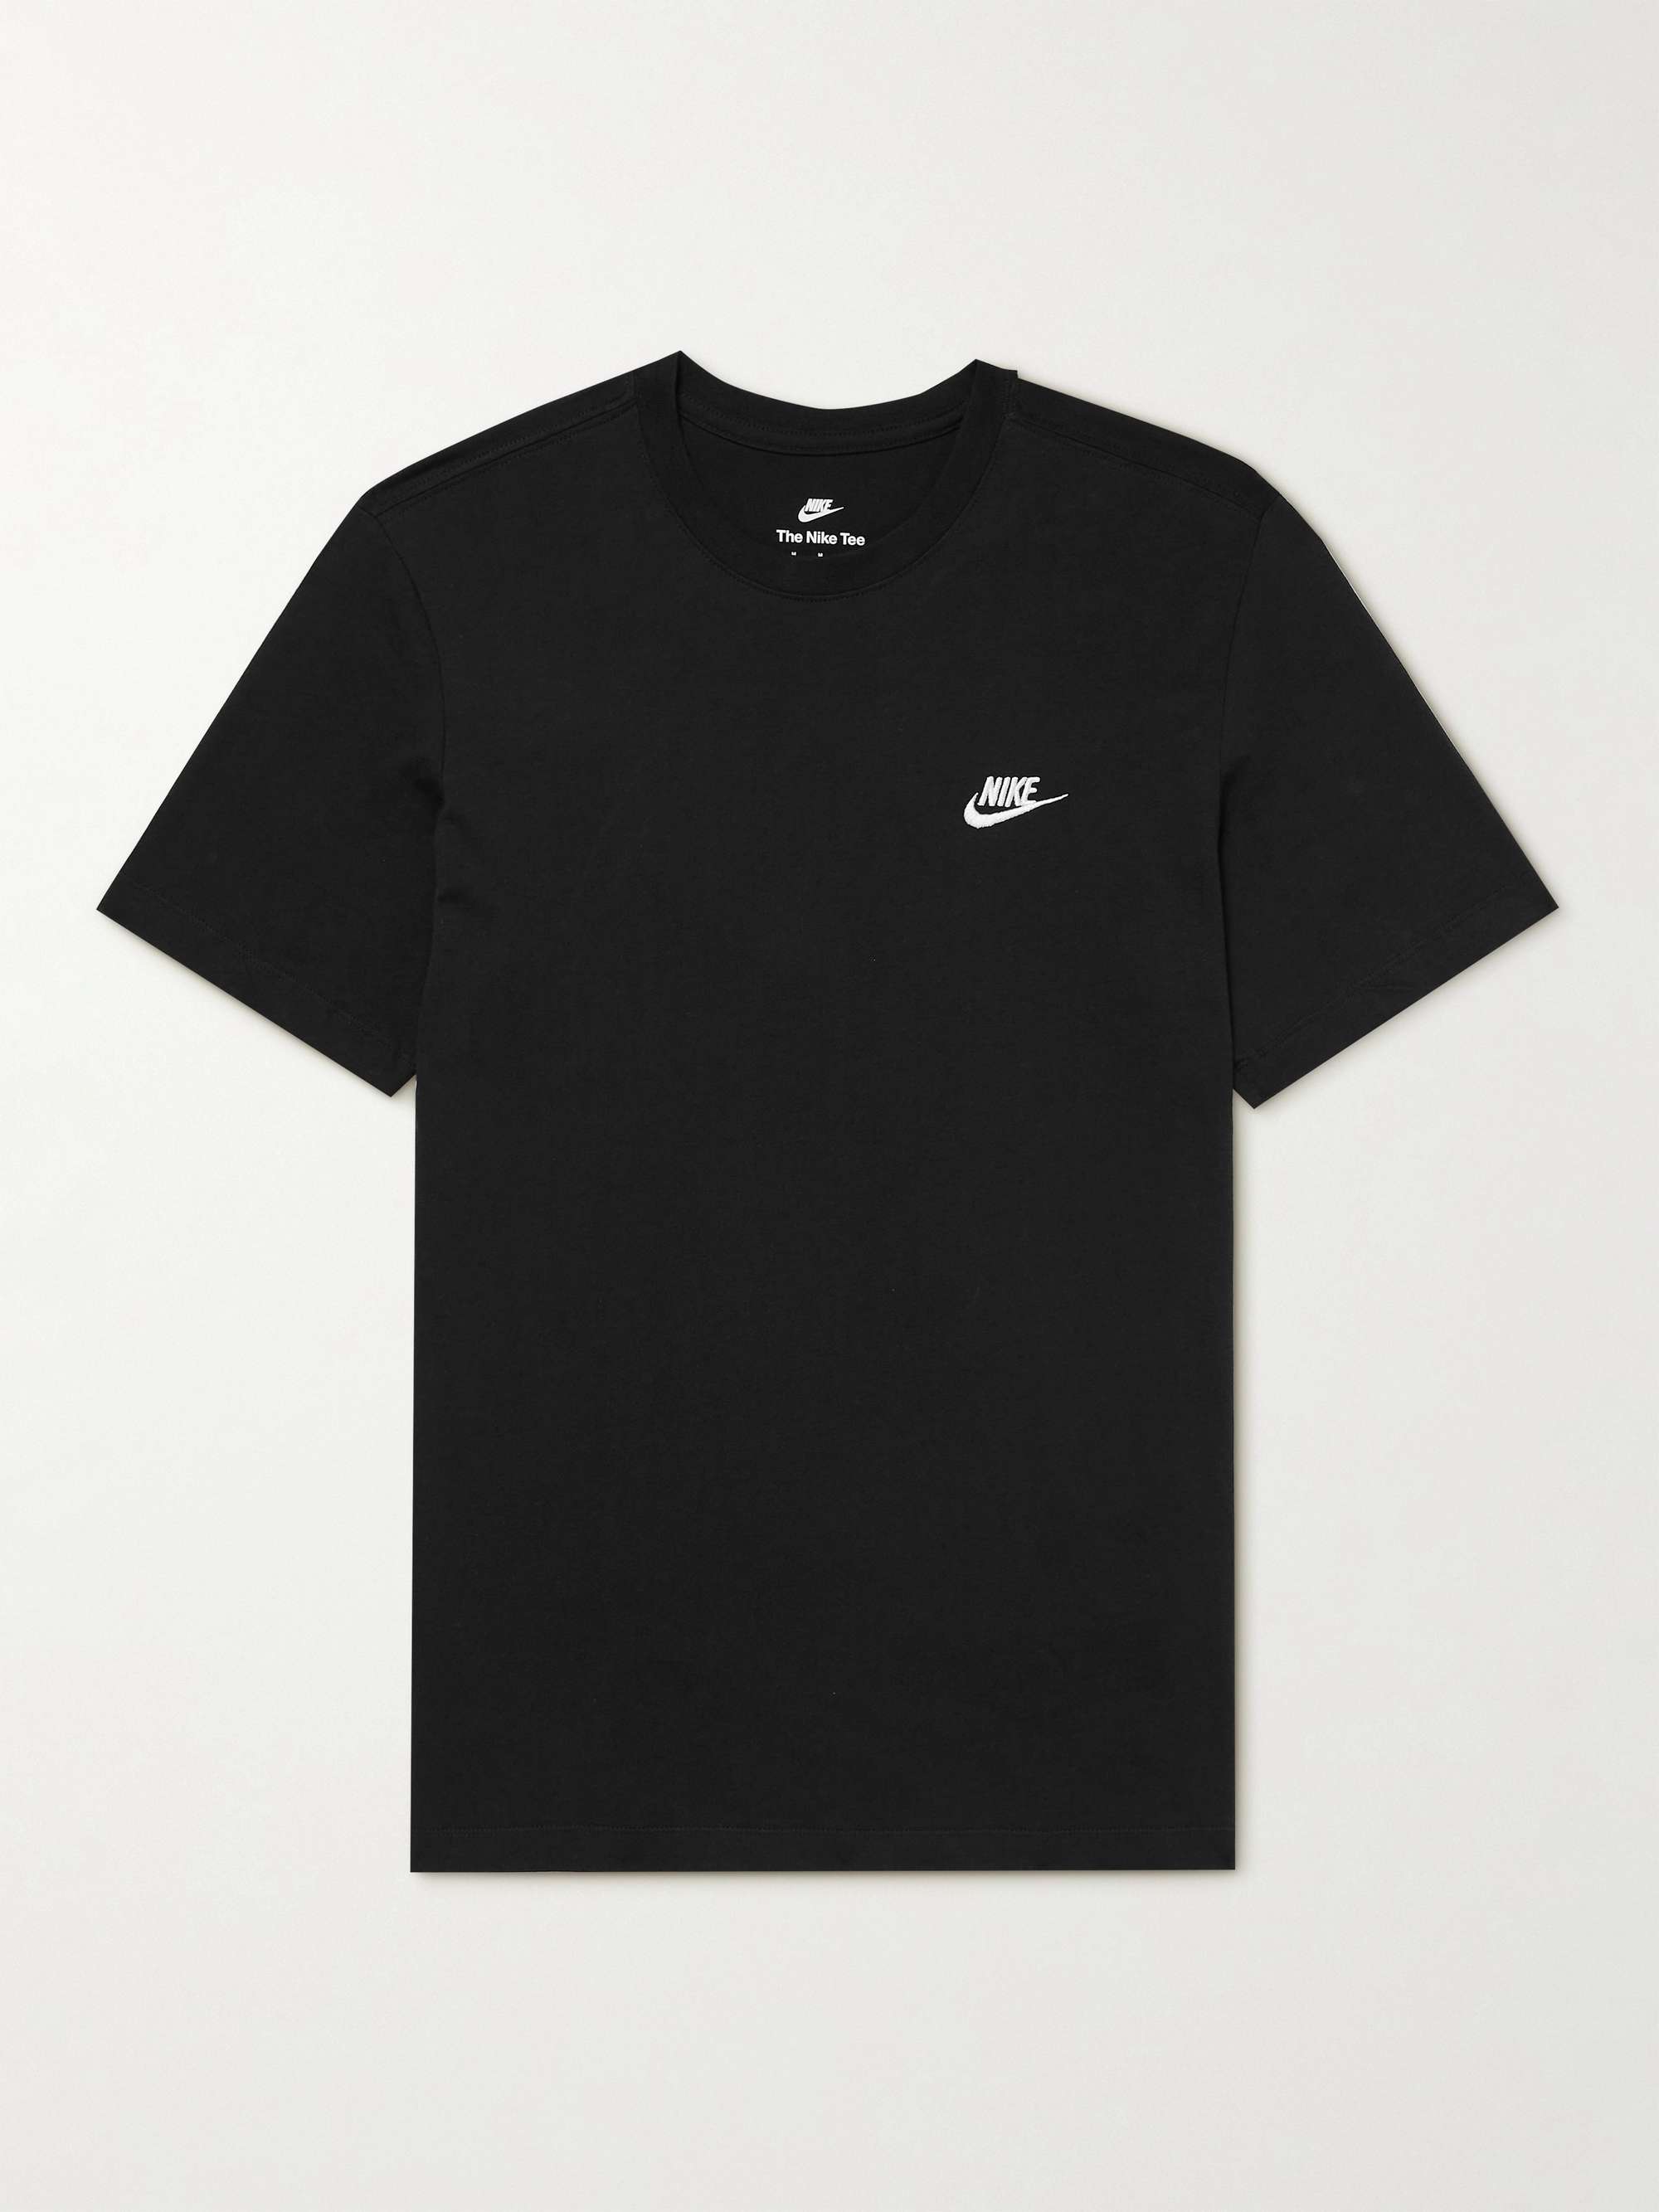 Nike Sportswear Club T-Shirt - Men's 